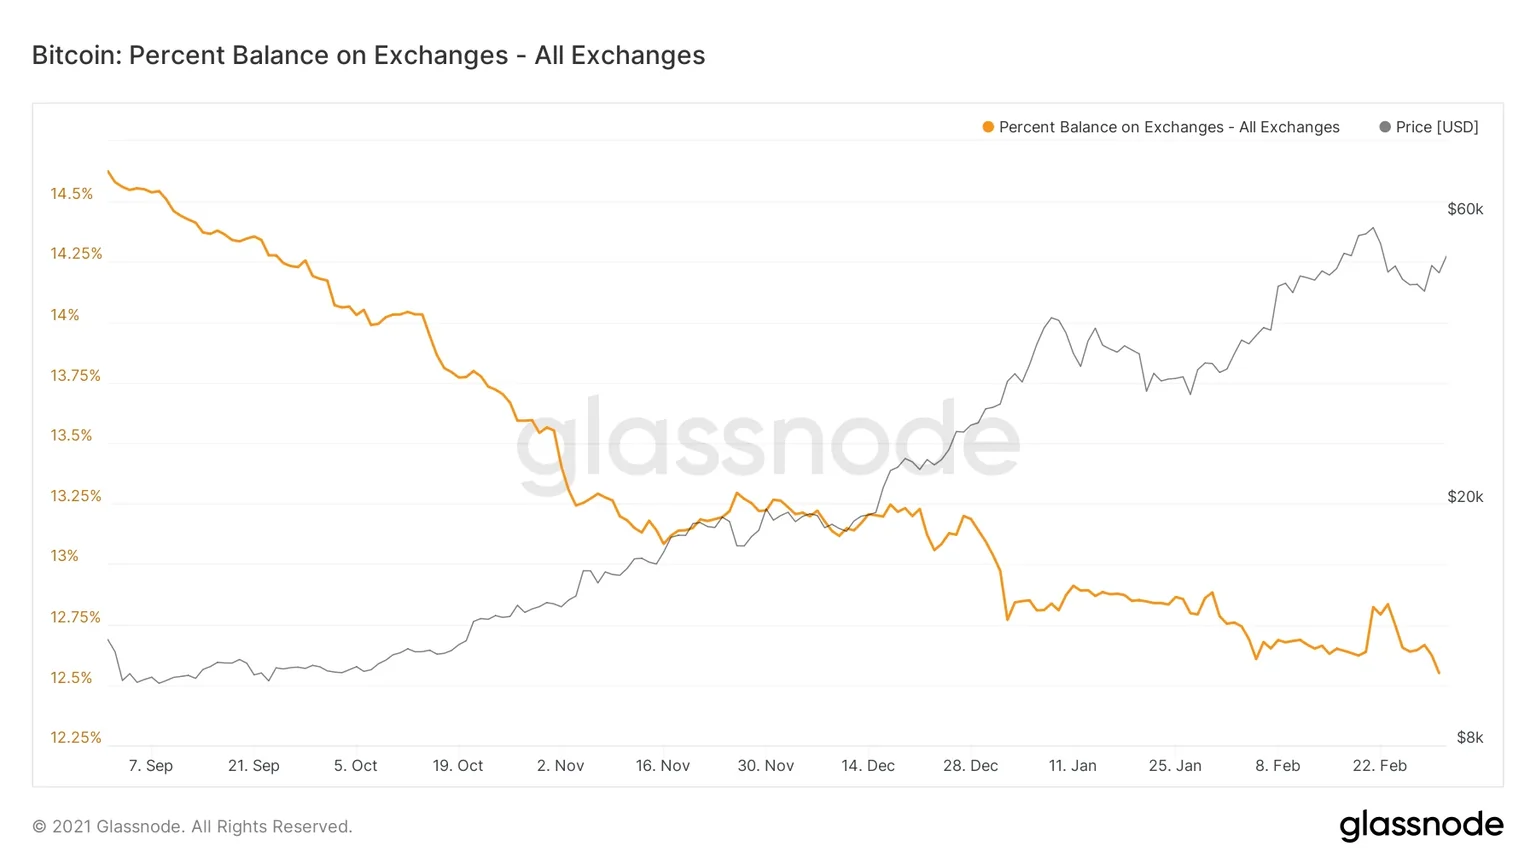 Bitcoin balance on exchanges